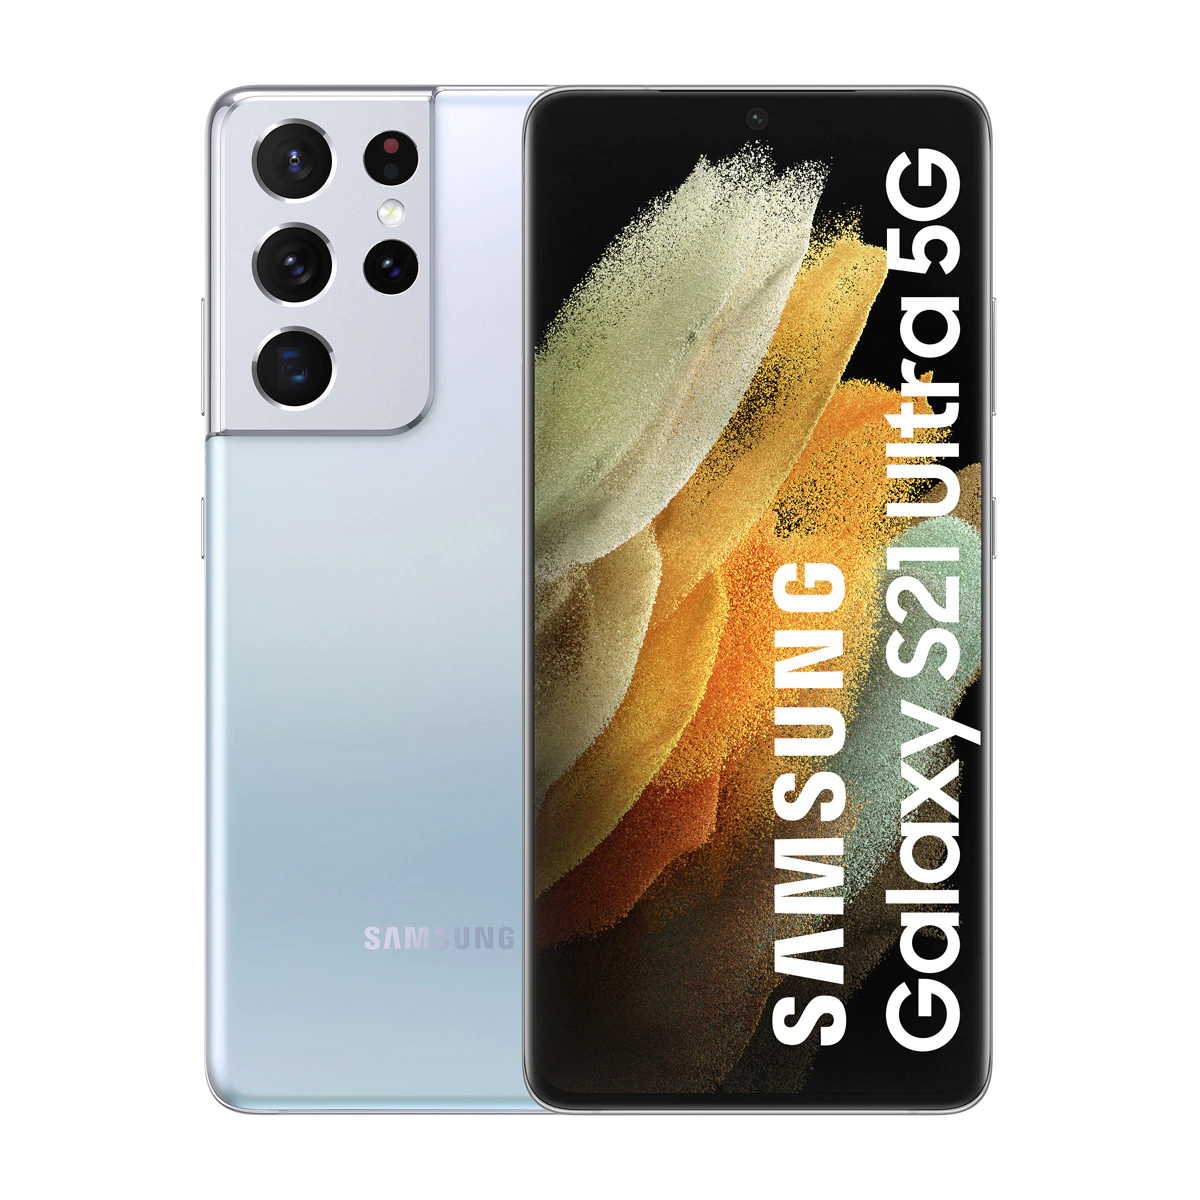 Samsung Galaxy S21 Ultra 5G 12 GB + 256 GB plata móvil libre